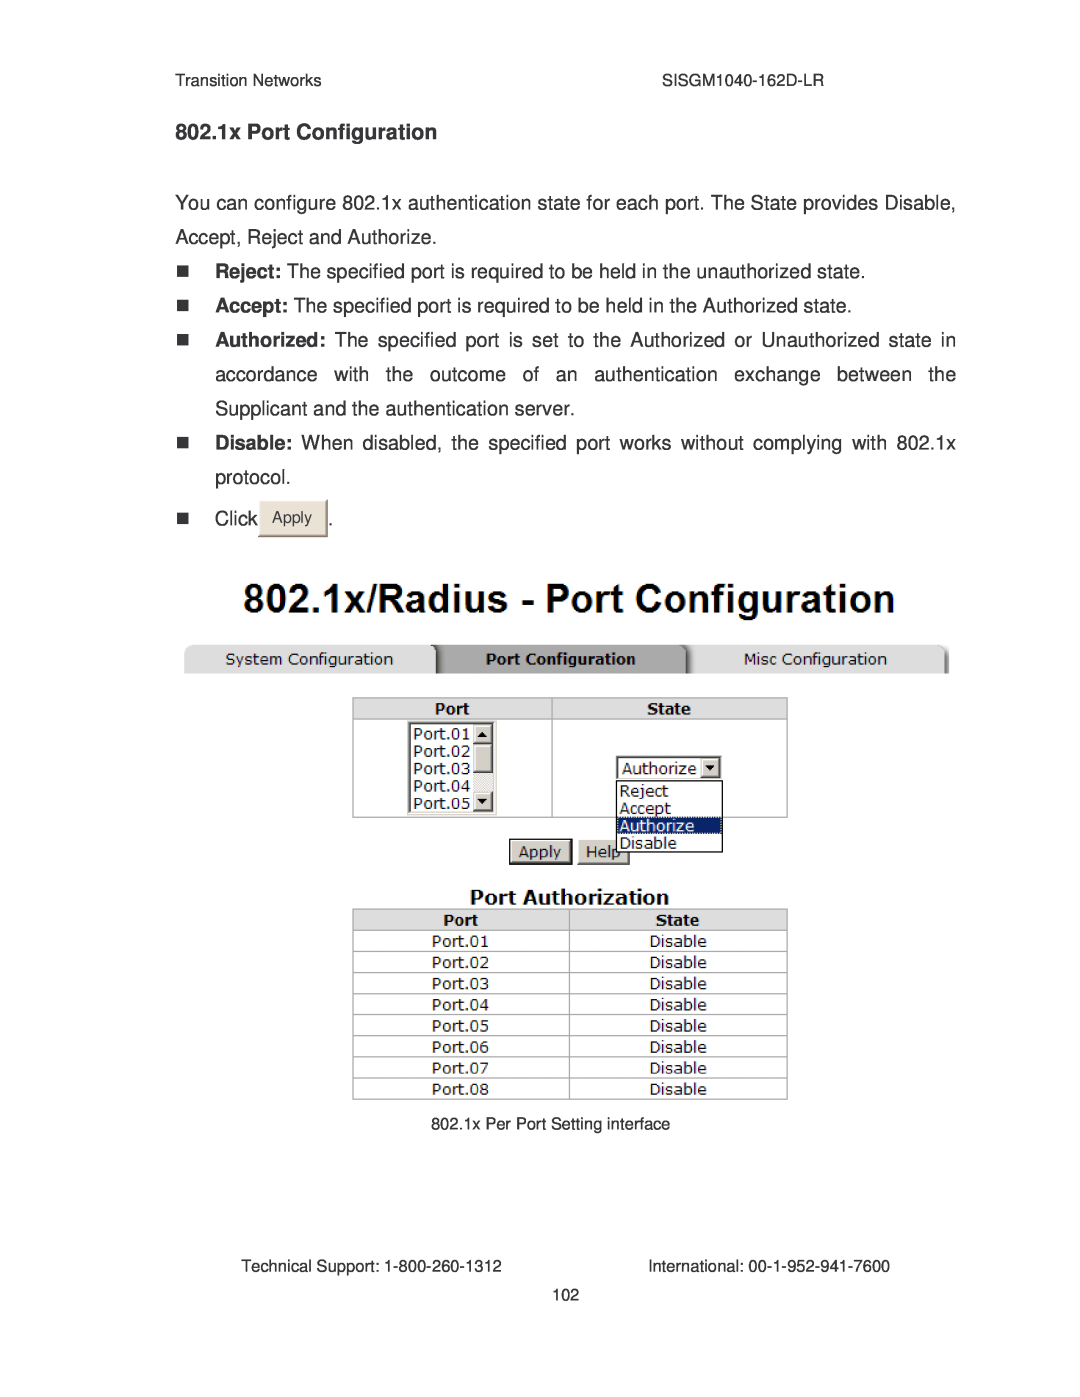 Transition Networks SISGM1040-162D manual 802.1x Port Configuration 